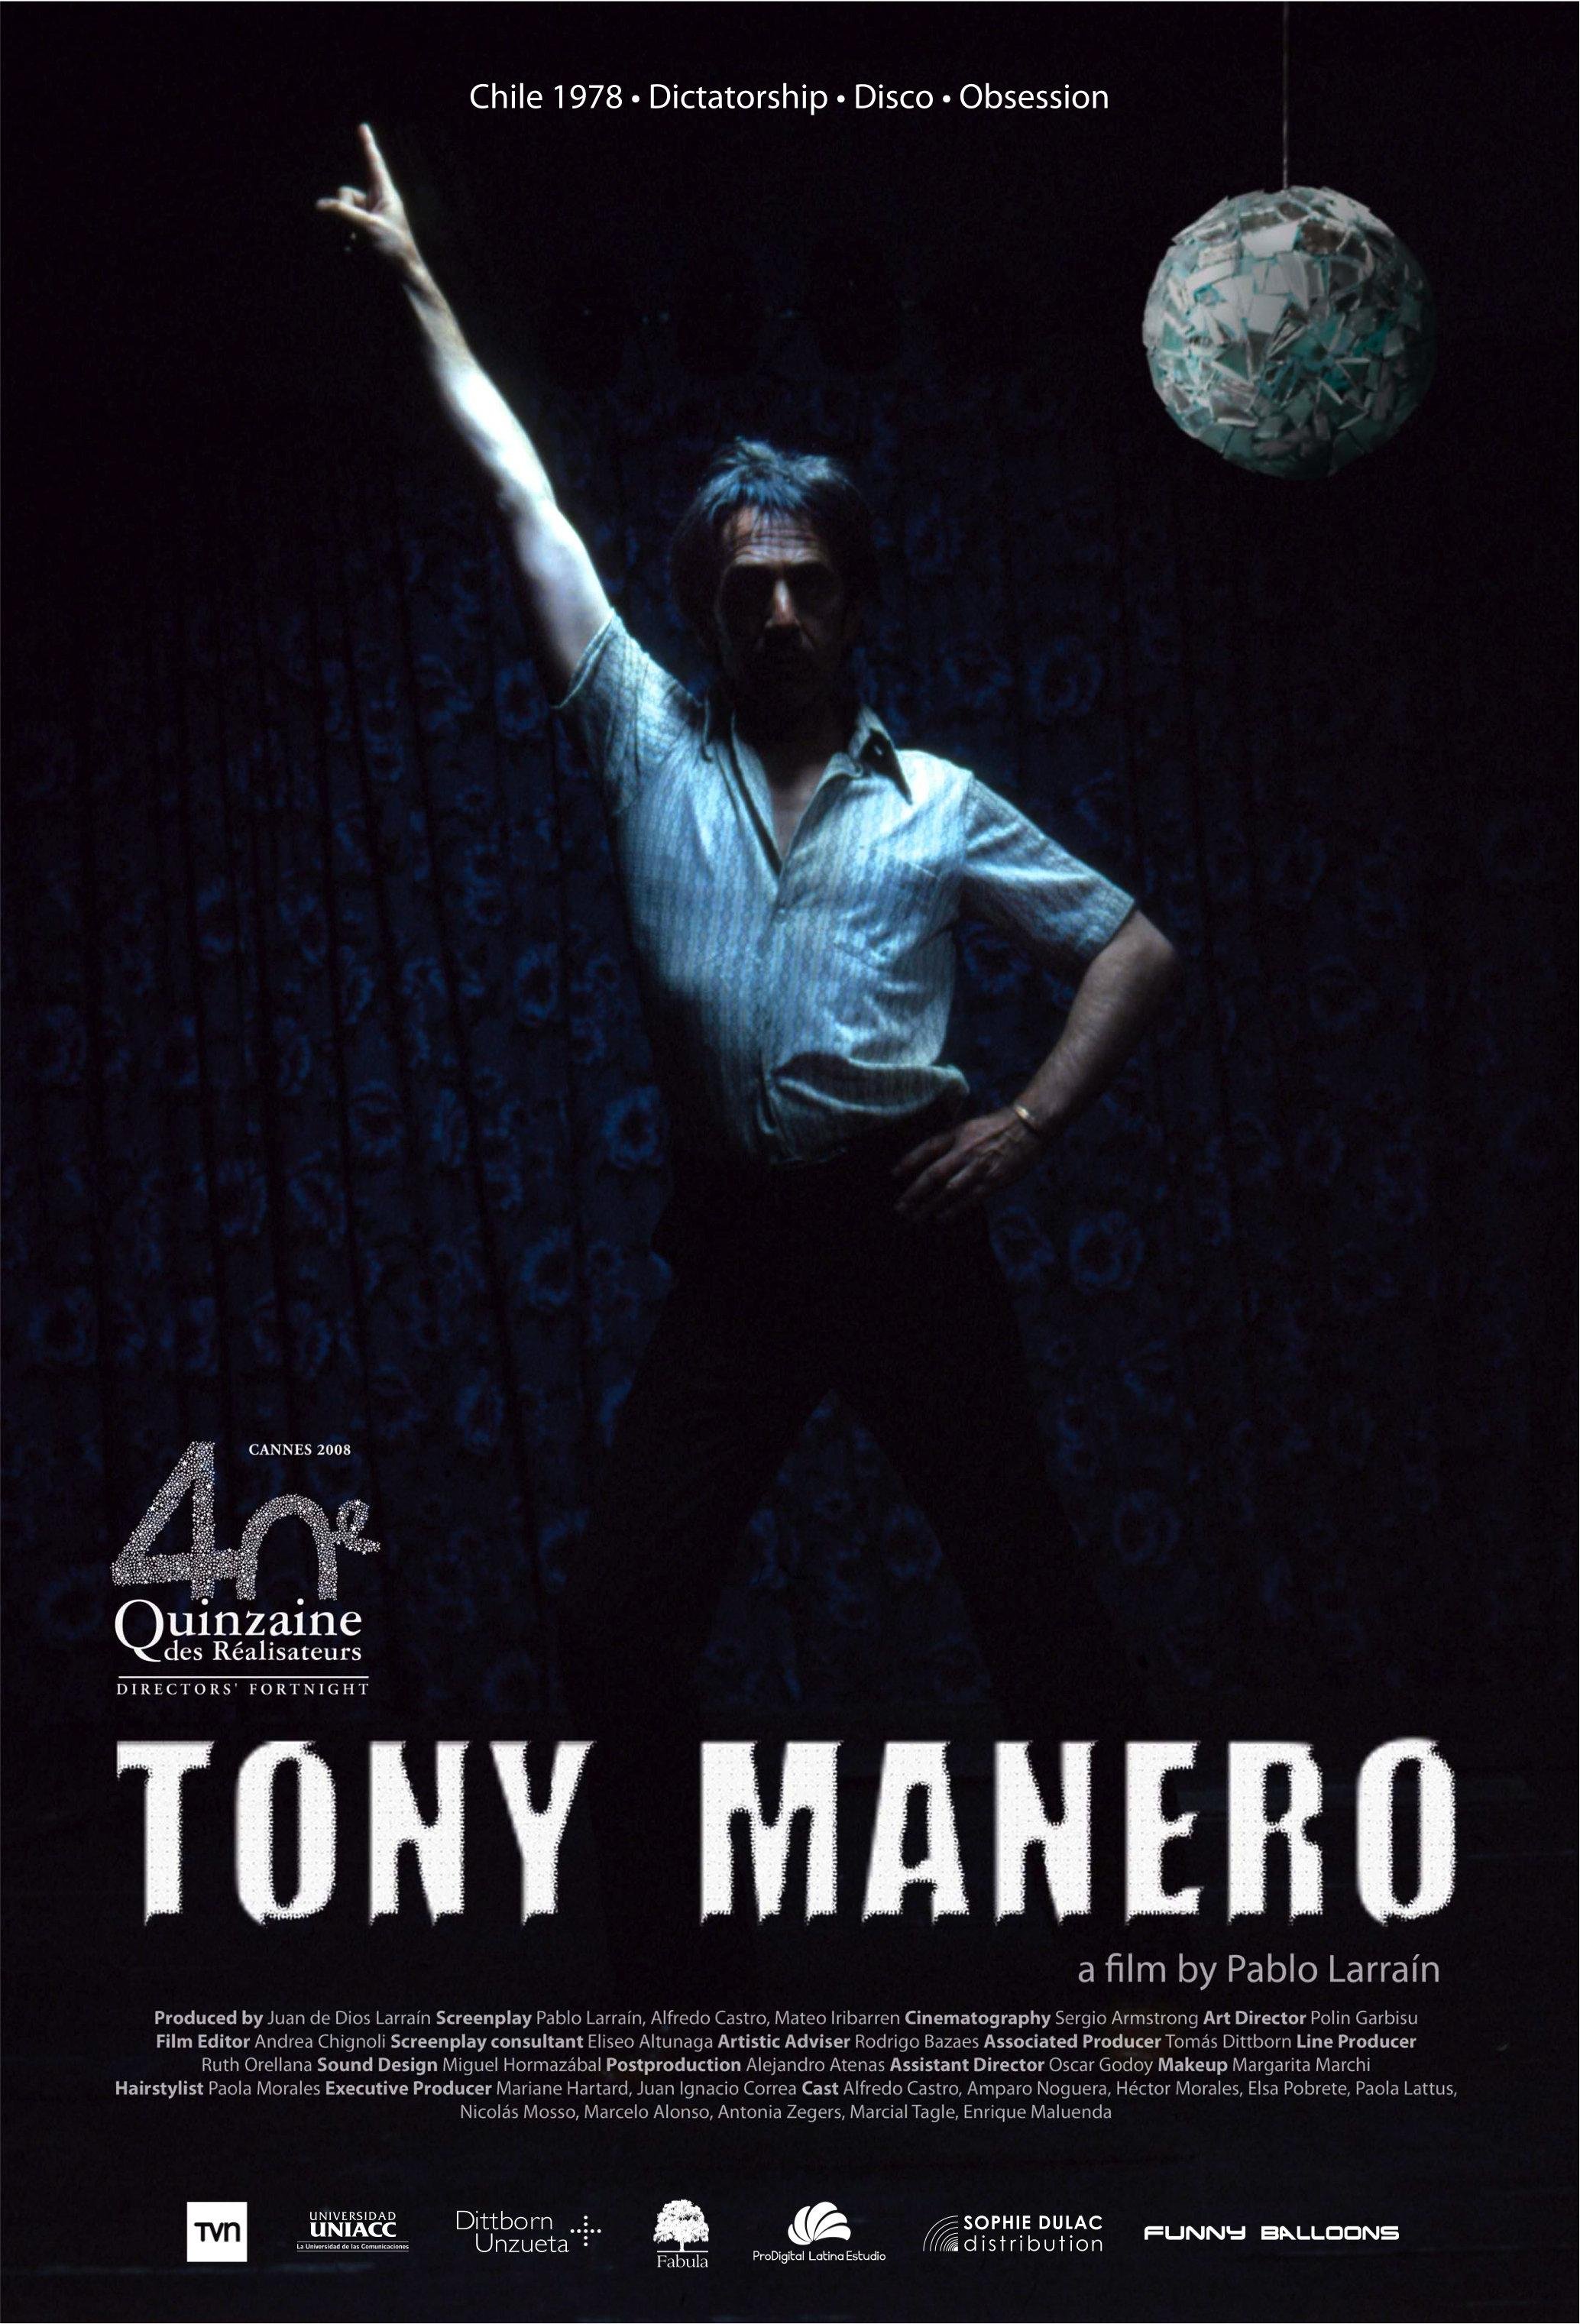 Poster of the movie Tony Manero